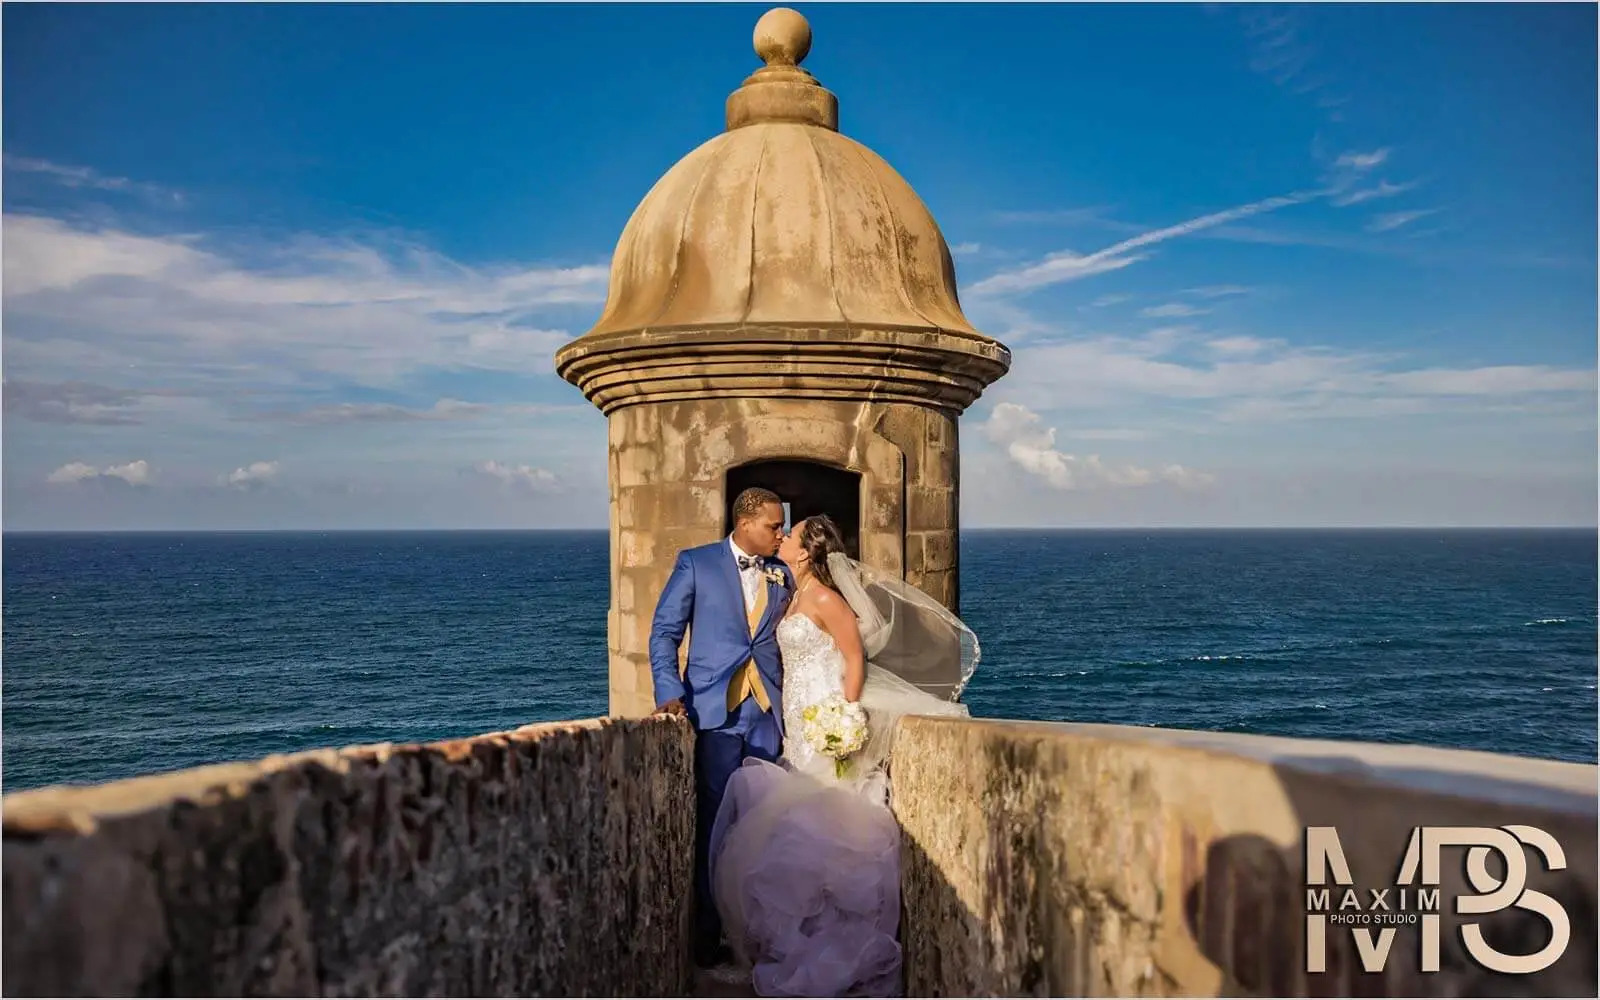 Puerto Rico Destination Wedding, Jessica + Ryan &#8211; Puerto Rico Destination Wedding